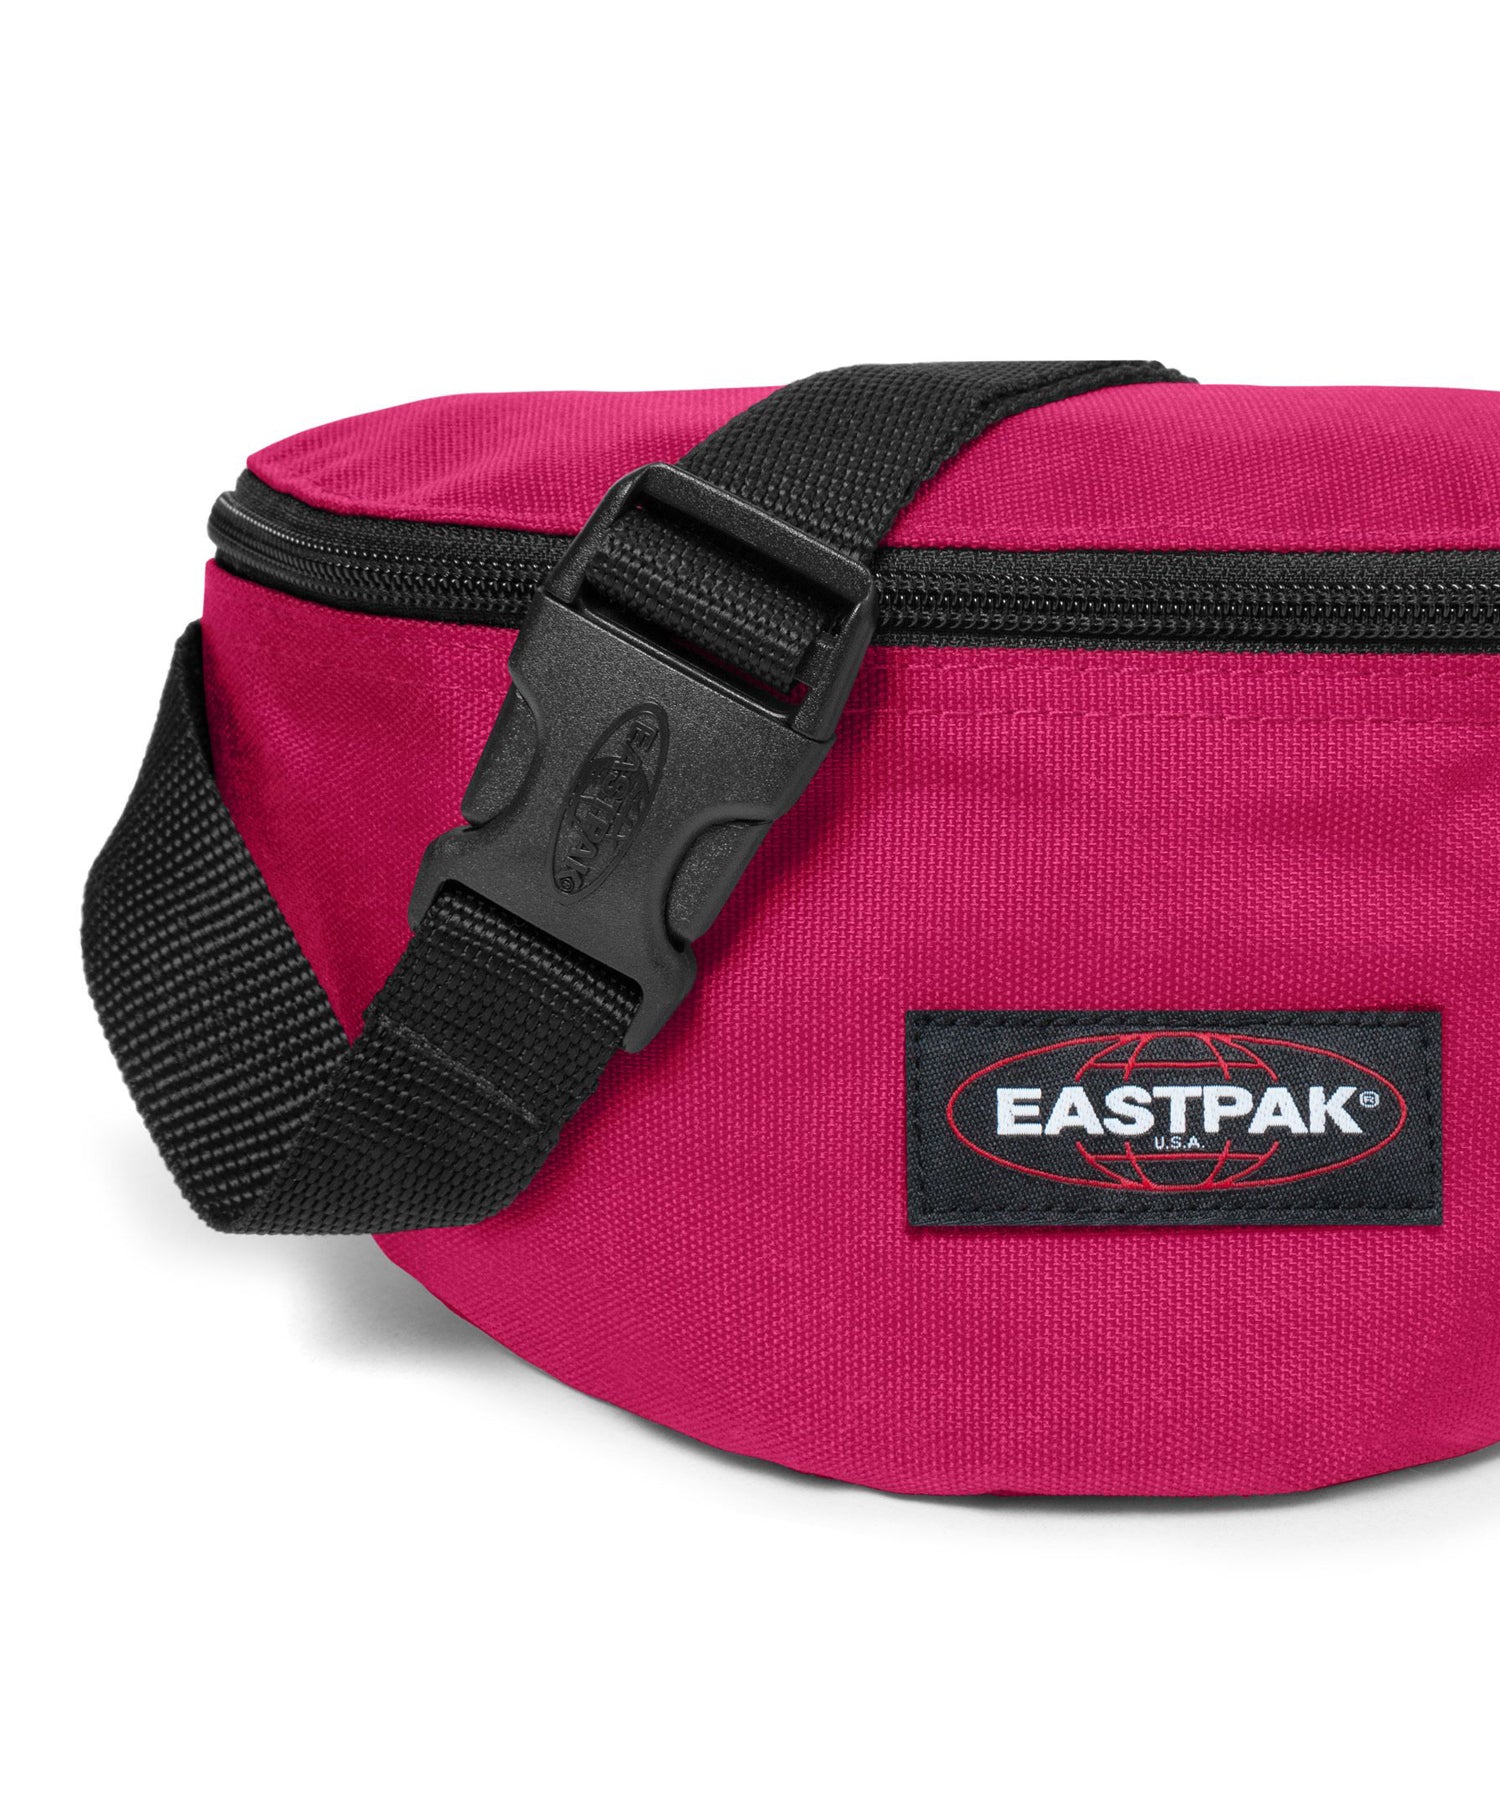 eastpak -springer riñonera ruby pink-color rosa-bolsillo trasero-cierre cremallera-producto impermeable y vegano..